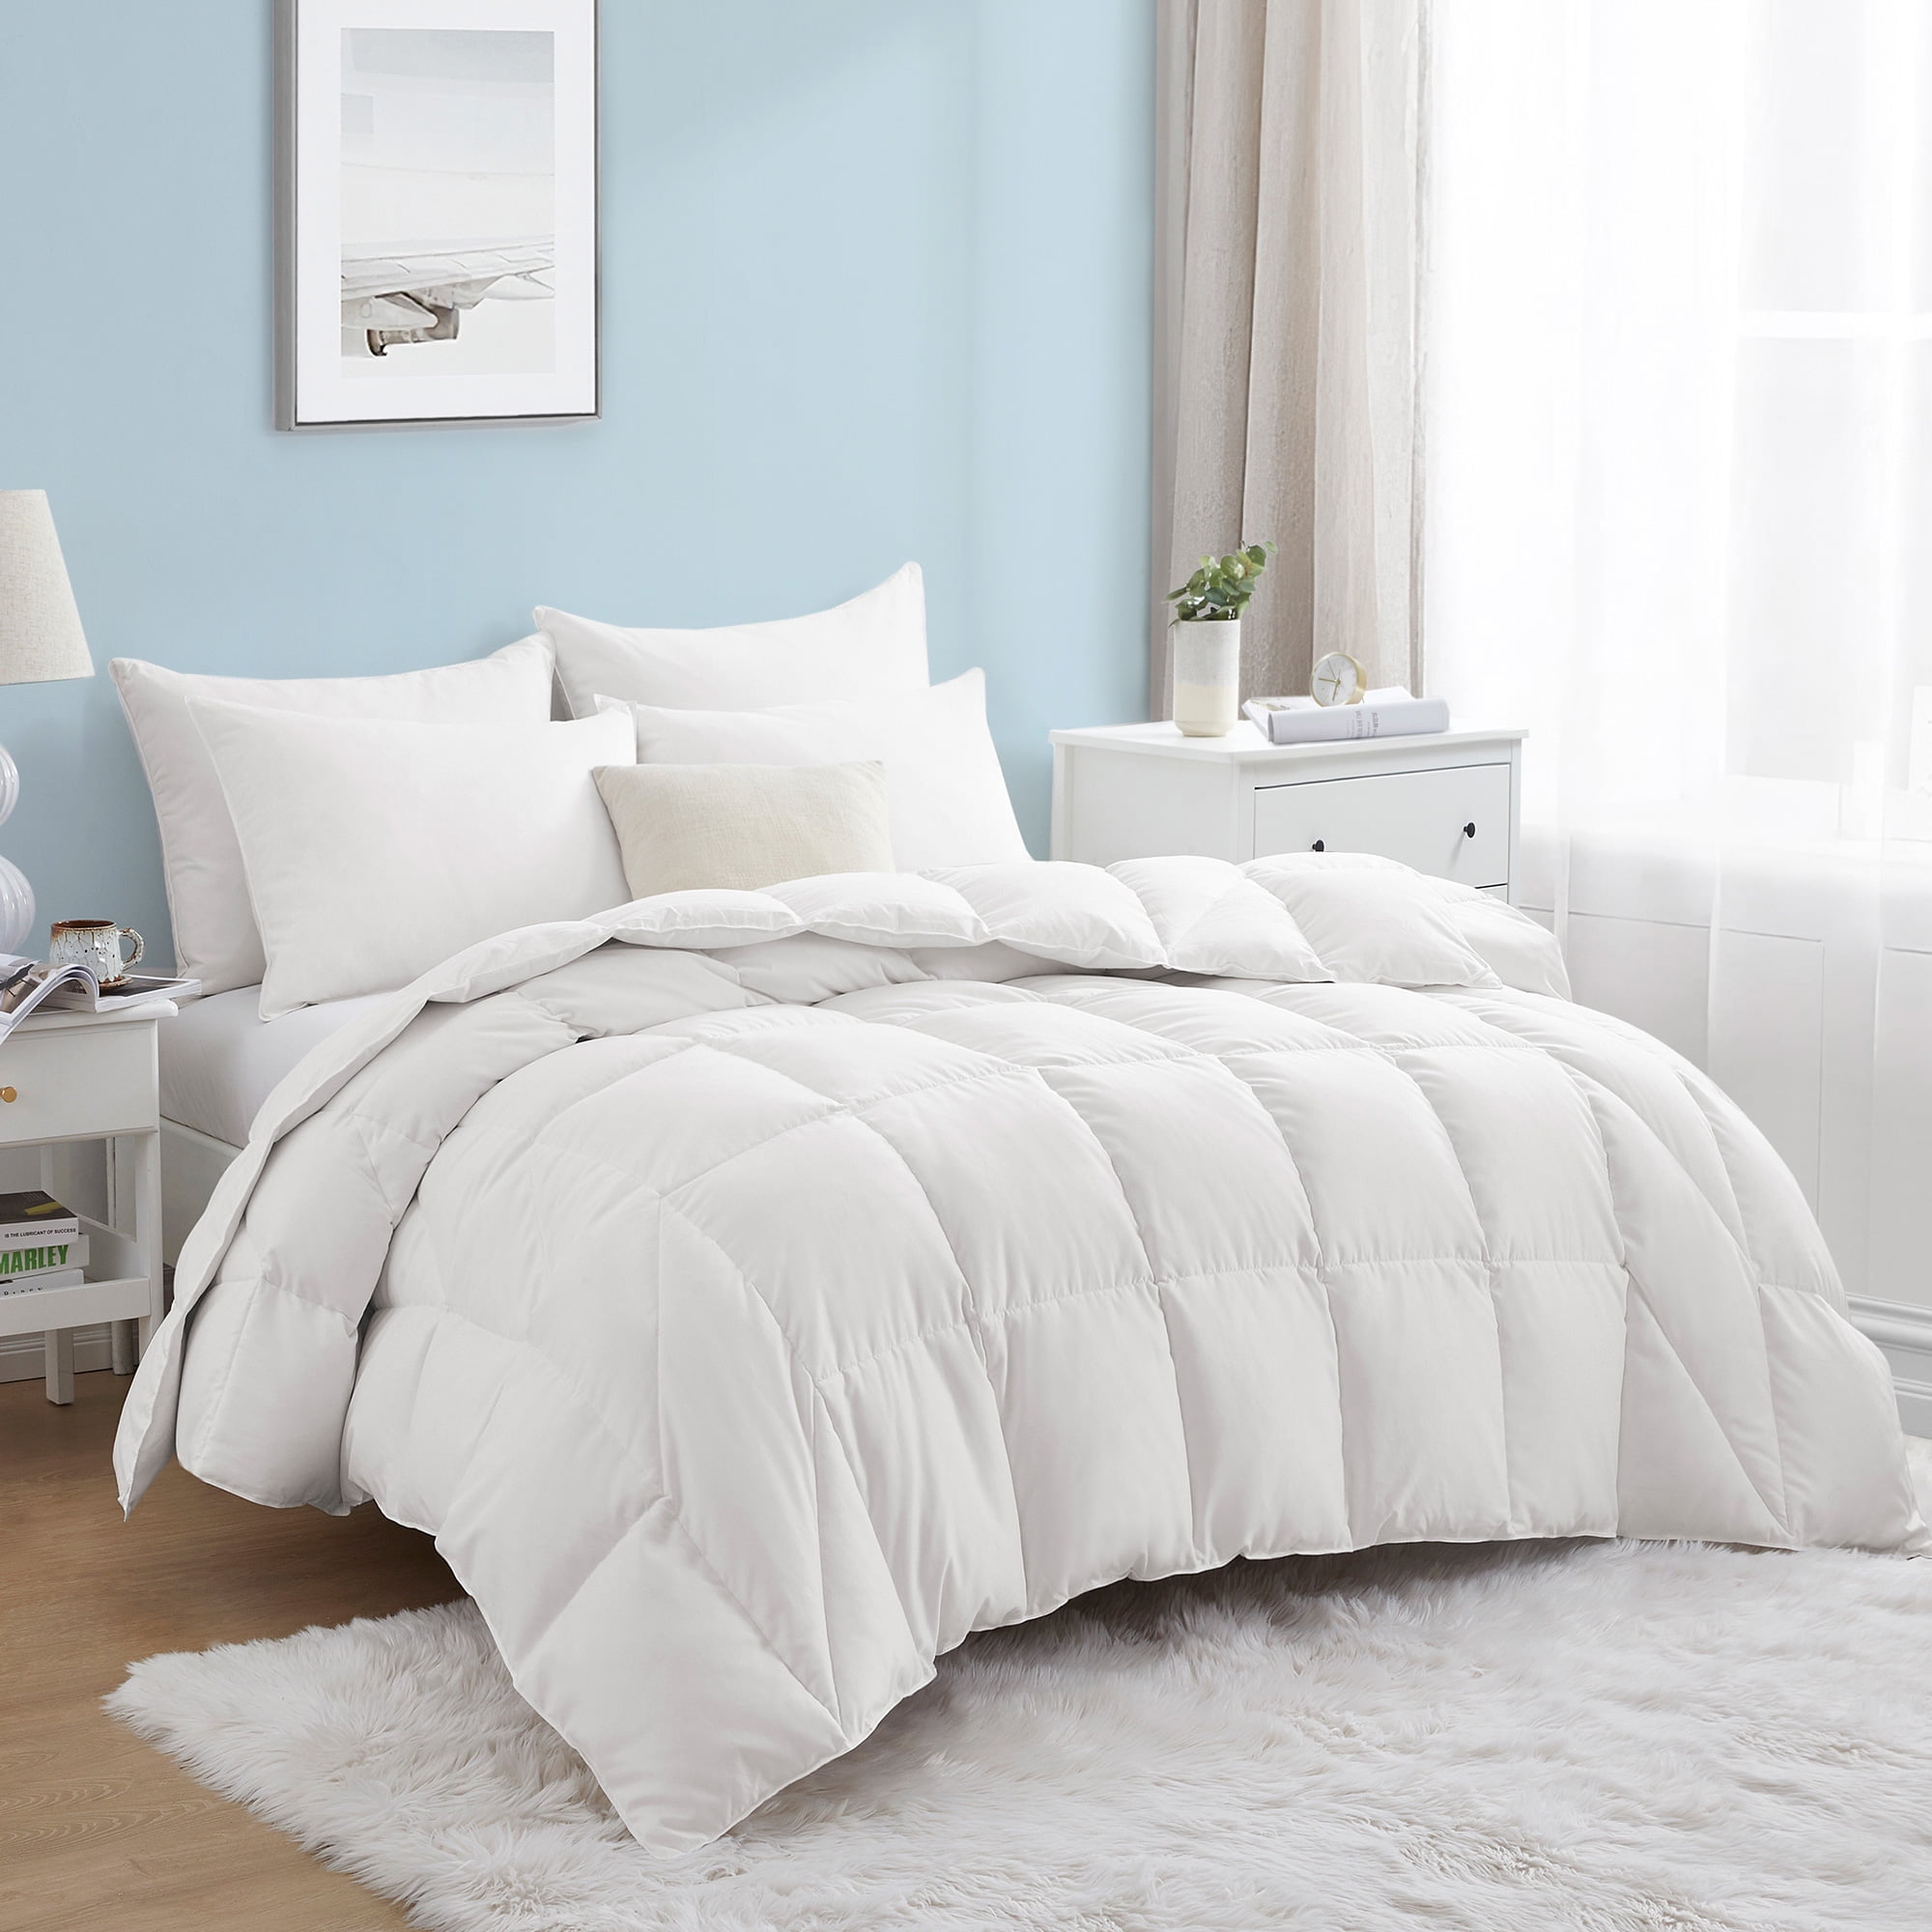 Details about   Tremendous All Season Down Alternative Comforter White Striped US Twin XL Size 